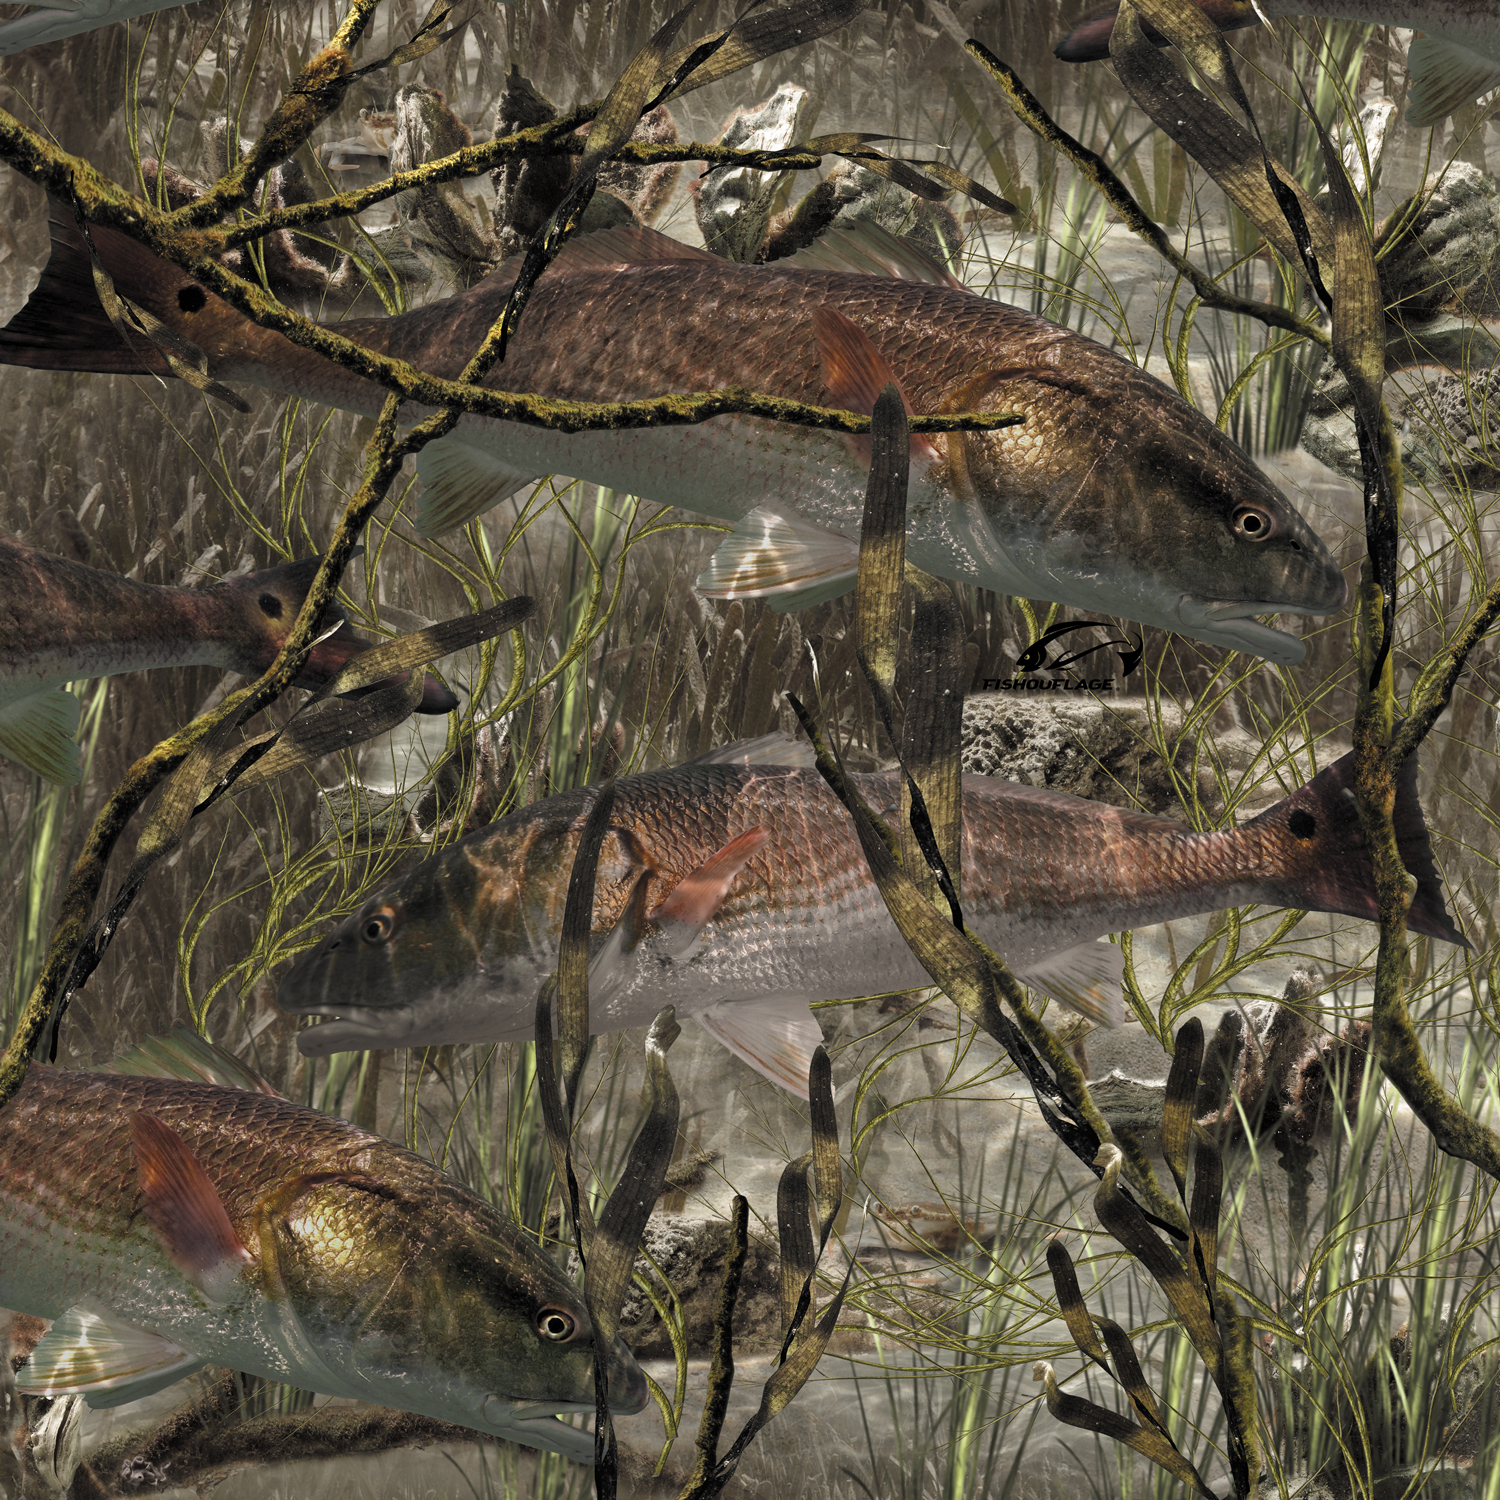 Fishouflage Camo Strike Bass Fishing Hat : : Sports